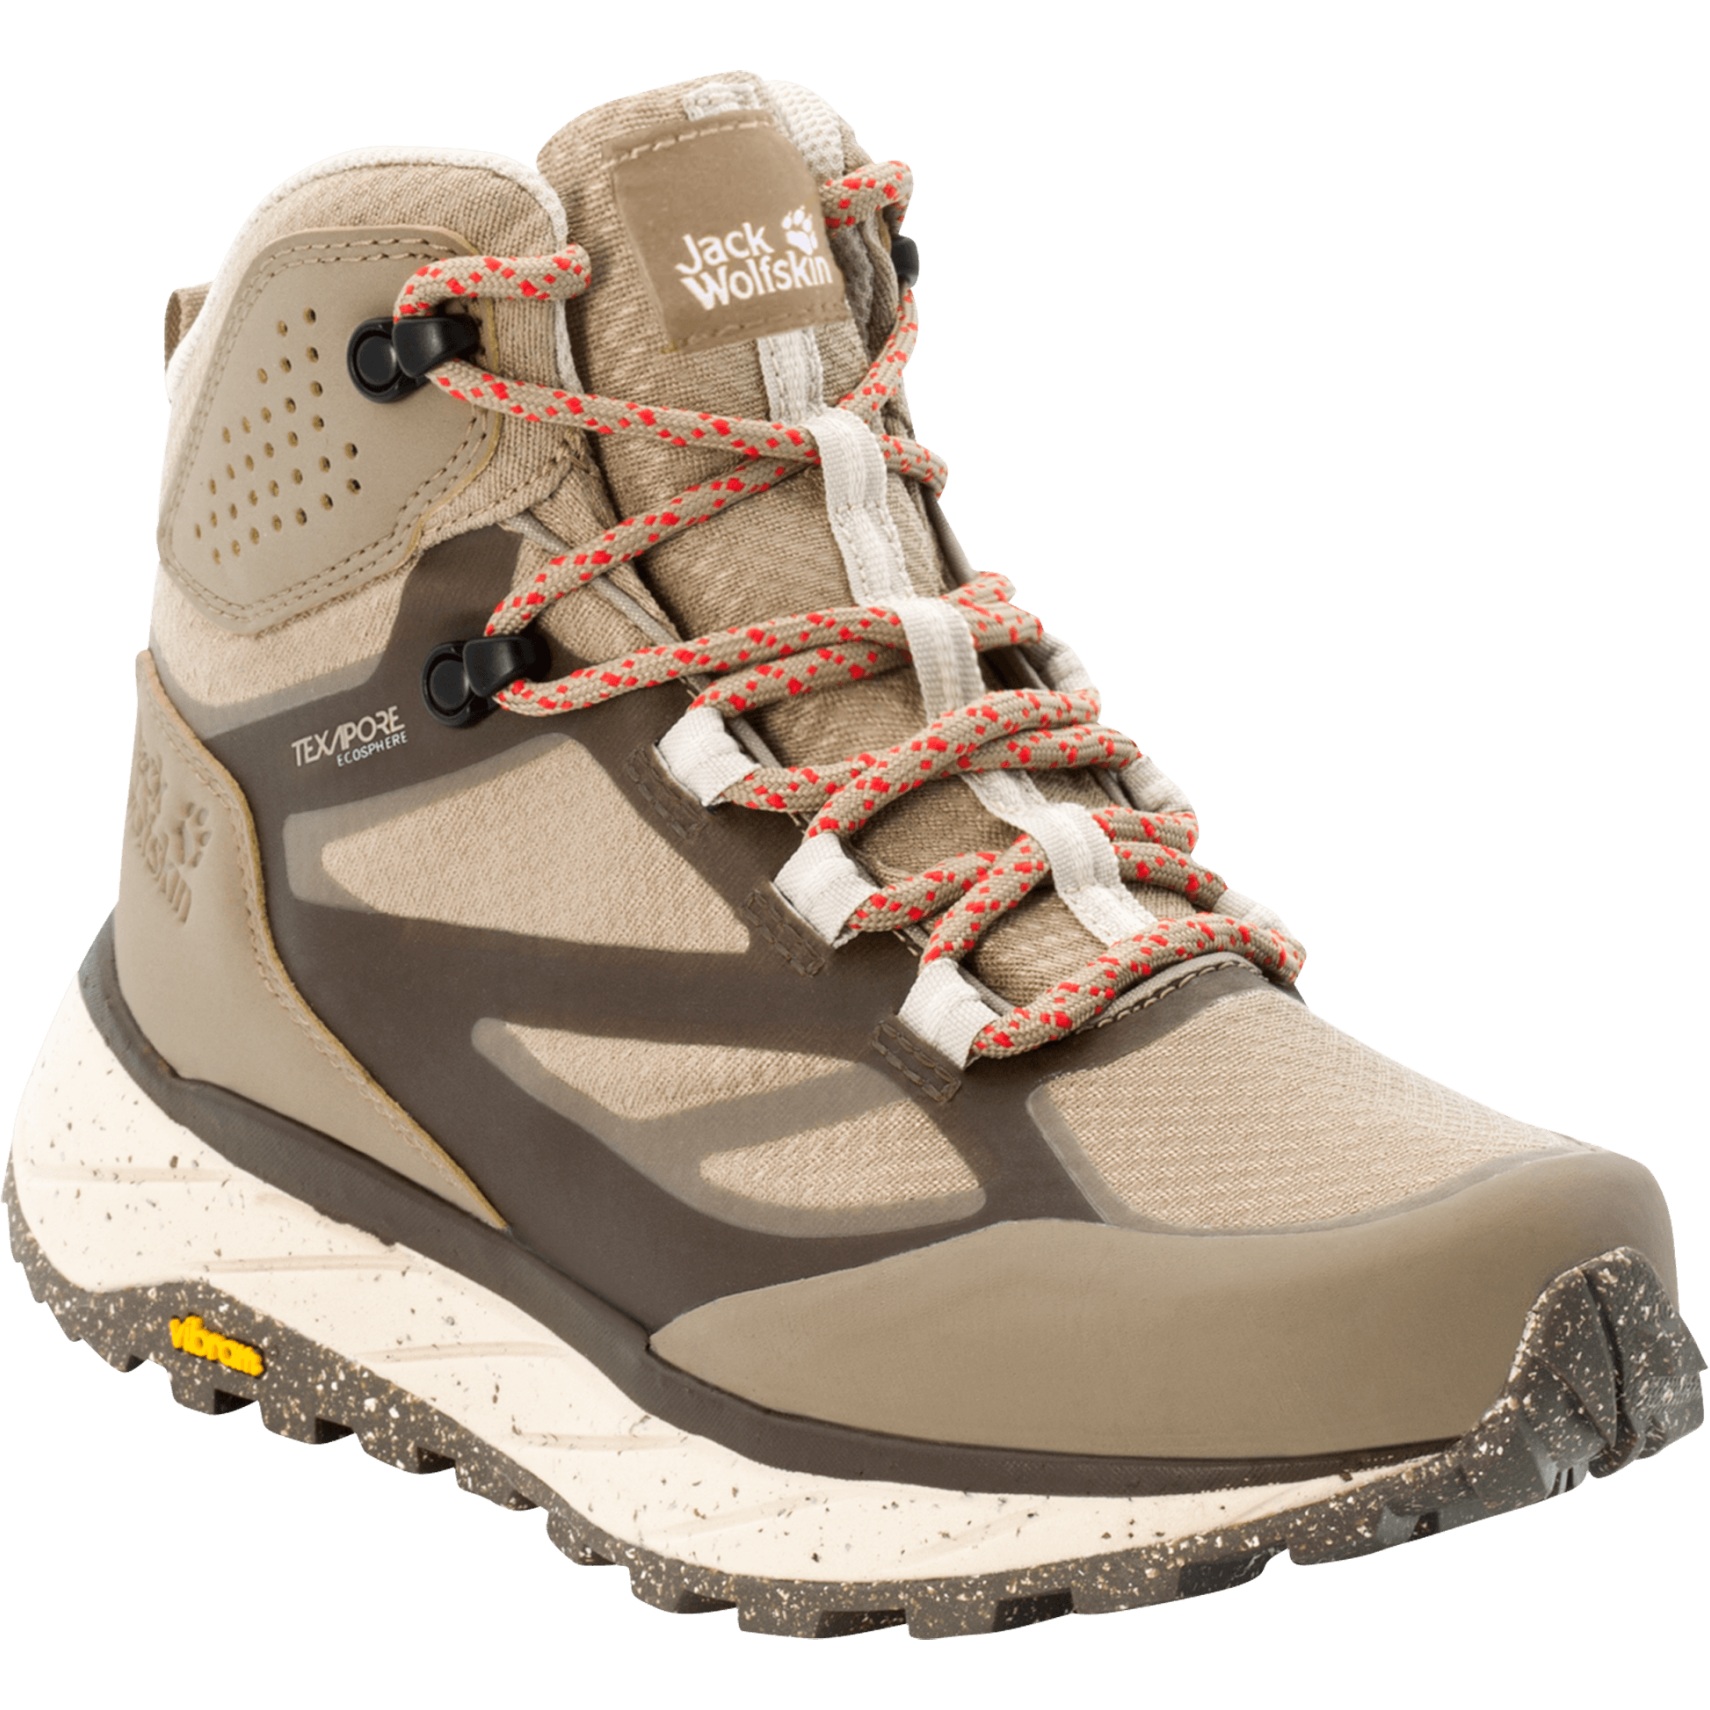 Picture of Jack Wolfskin Terraventure Texapore Mid Hiking Boots Women - beige / light beige